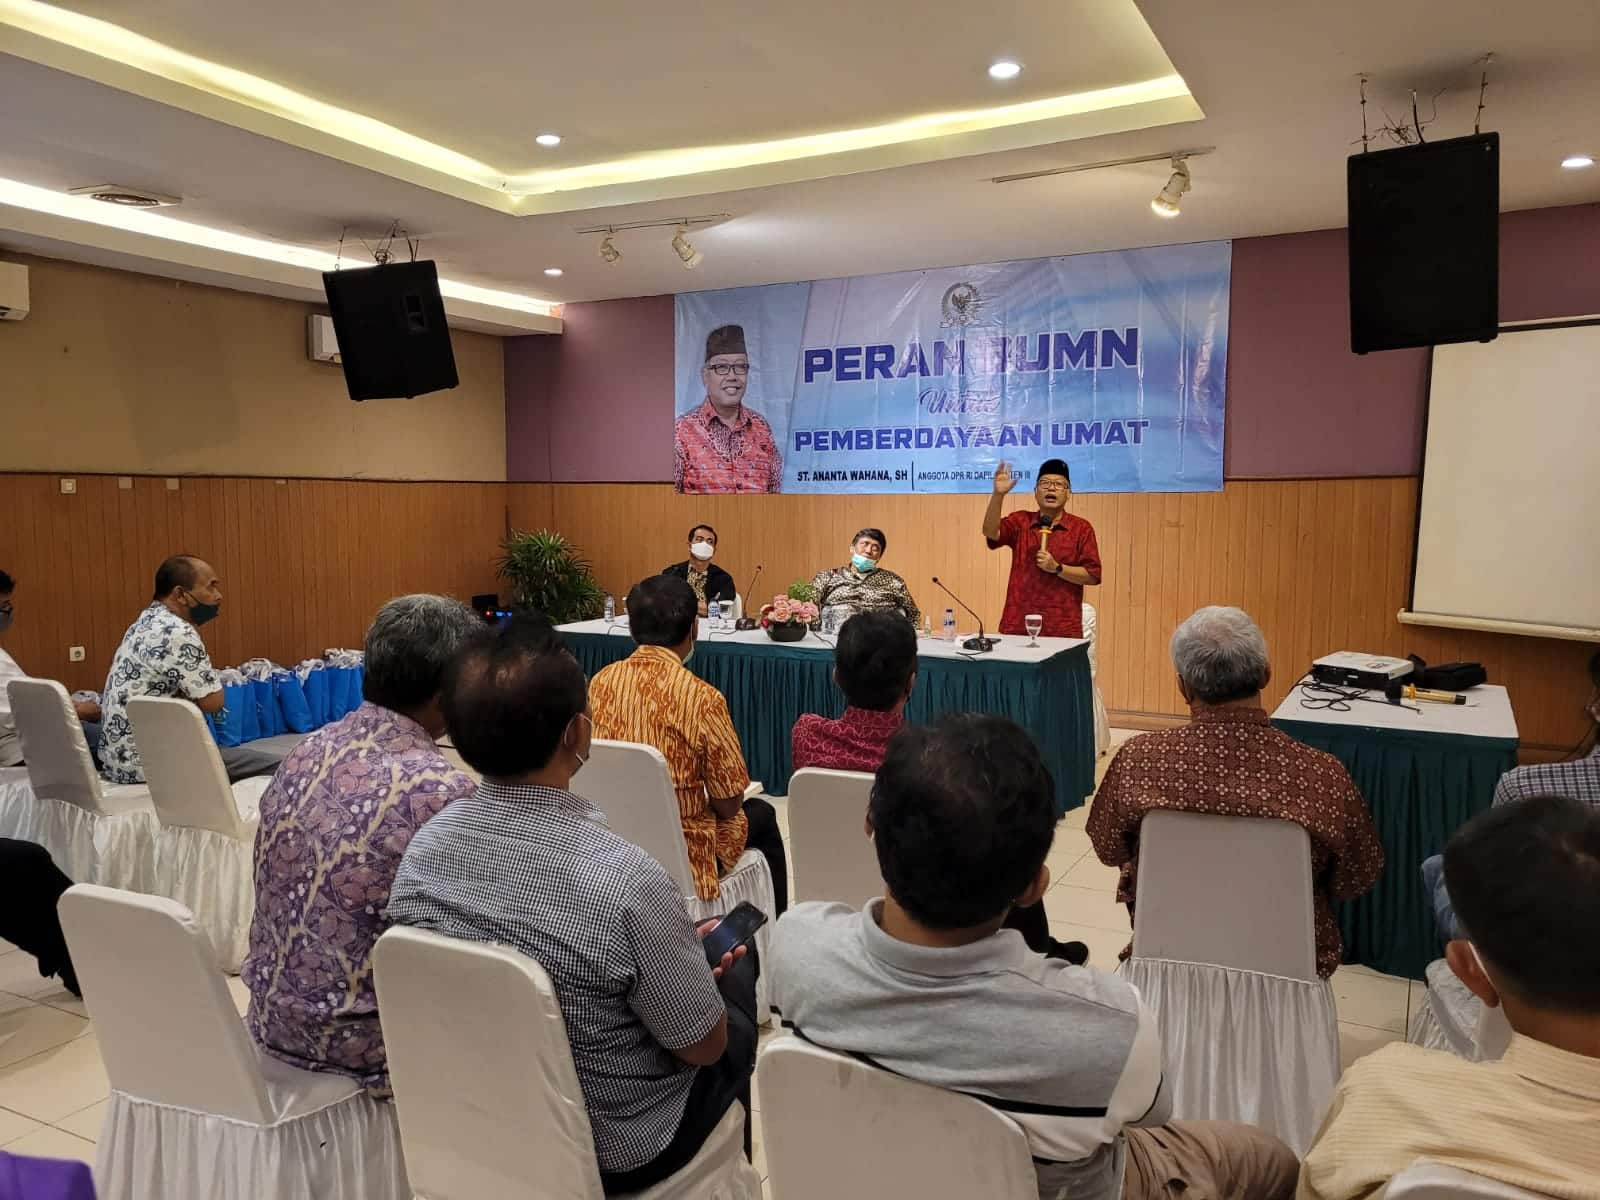 Kegiatan sosialisasi “Peran BUMN untuk Pemberdayaan Umat” di Rumah Makan Telaga Seafood, Kota Tangerang Selatan, Minggu (26/12/2021).